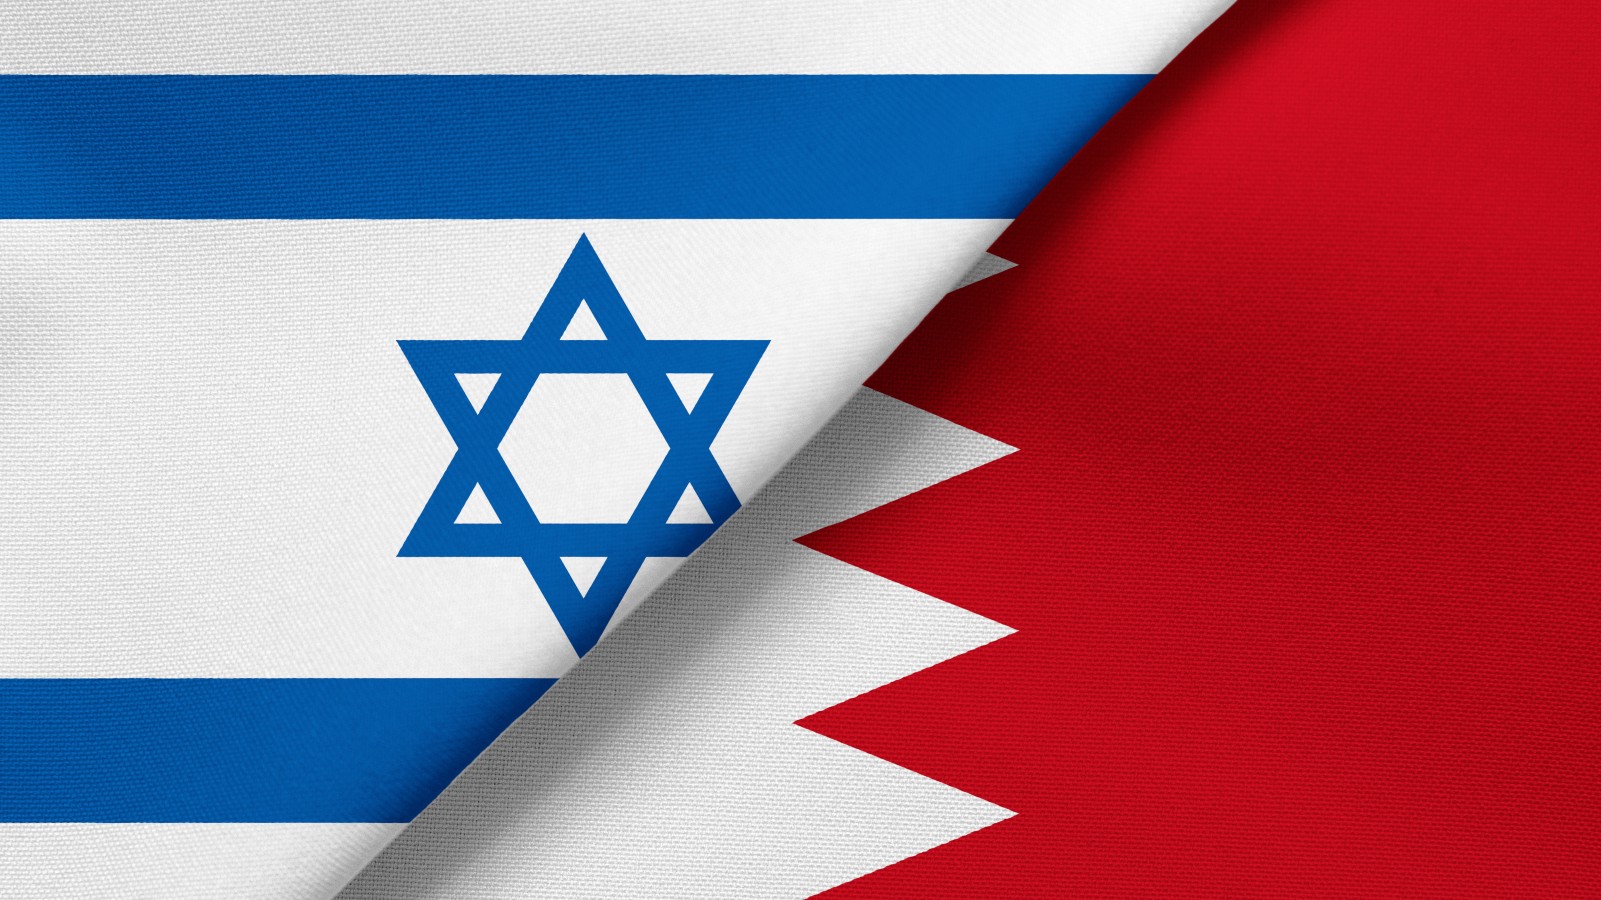 The Israeli and Bahraini flags. Image via Shutterstock.com